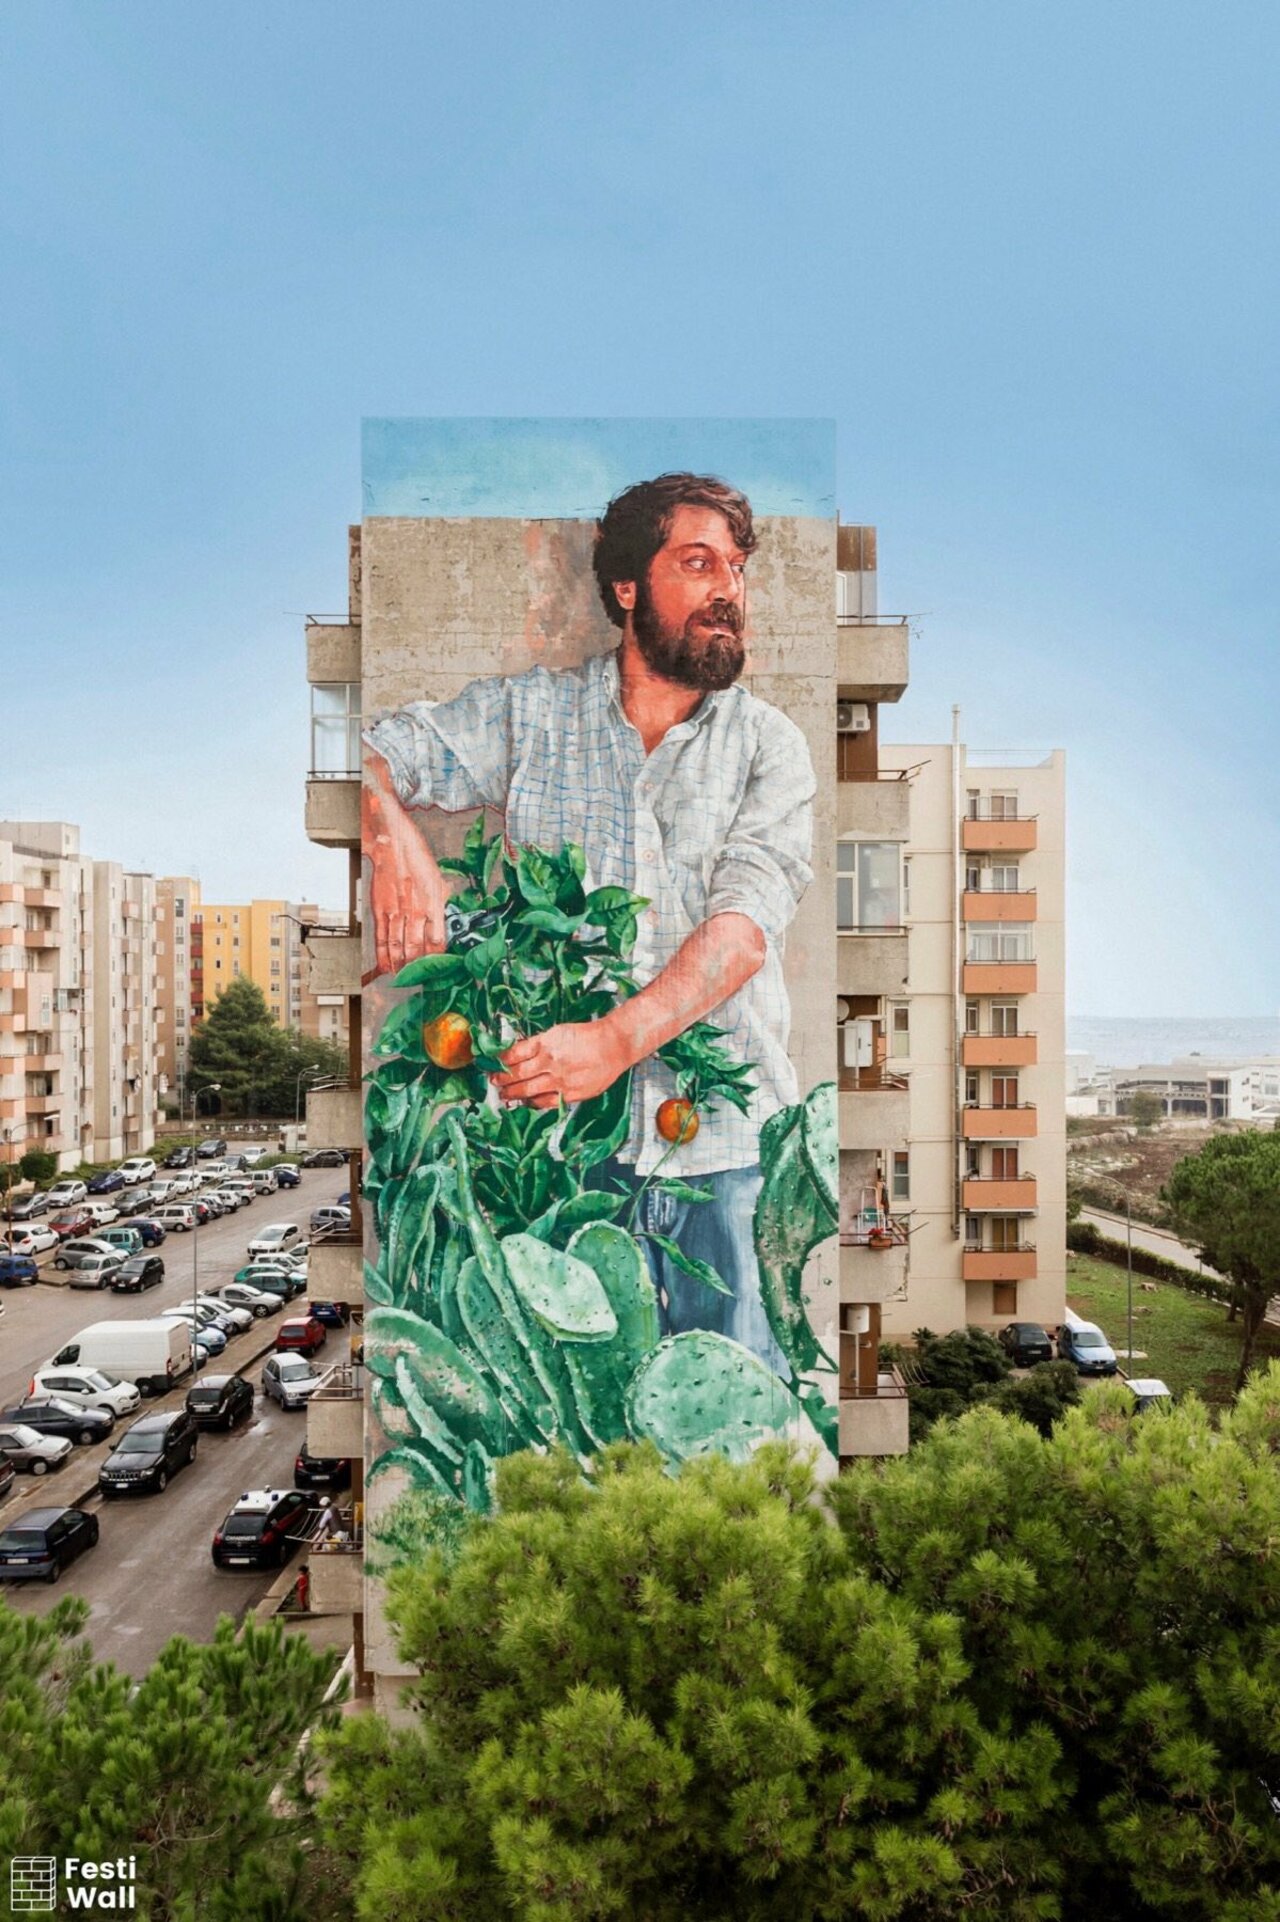 #mural by Fintan Magee #Ragusa #Italy #streetart #grafitti #art https://t.co/9dC9CEhCJE